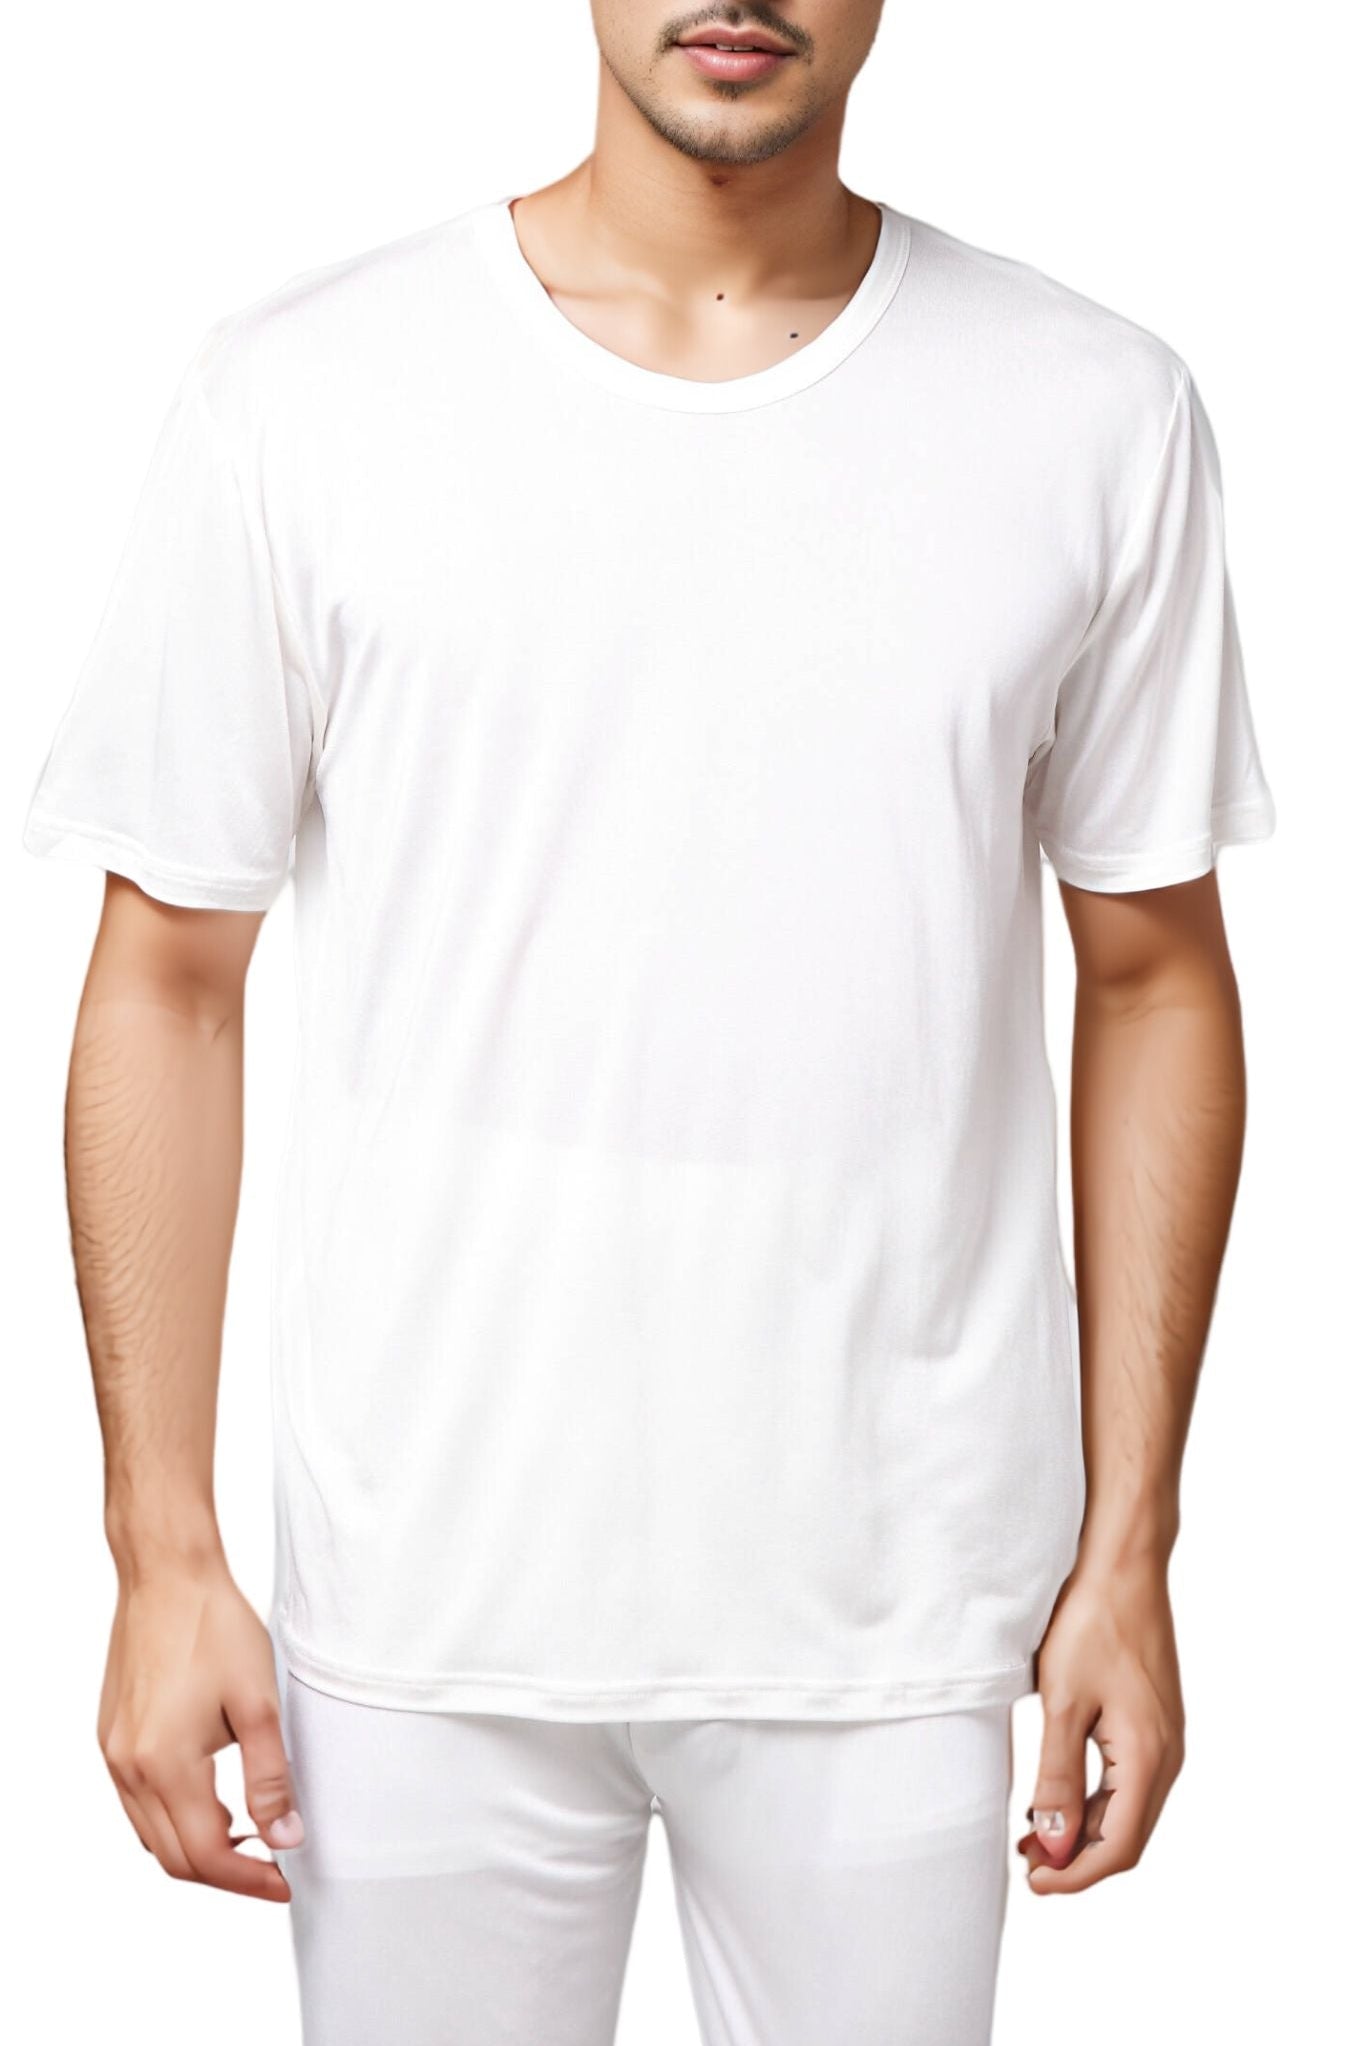 image of a man wearing ultra-lite natural silk shirt